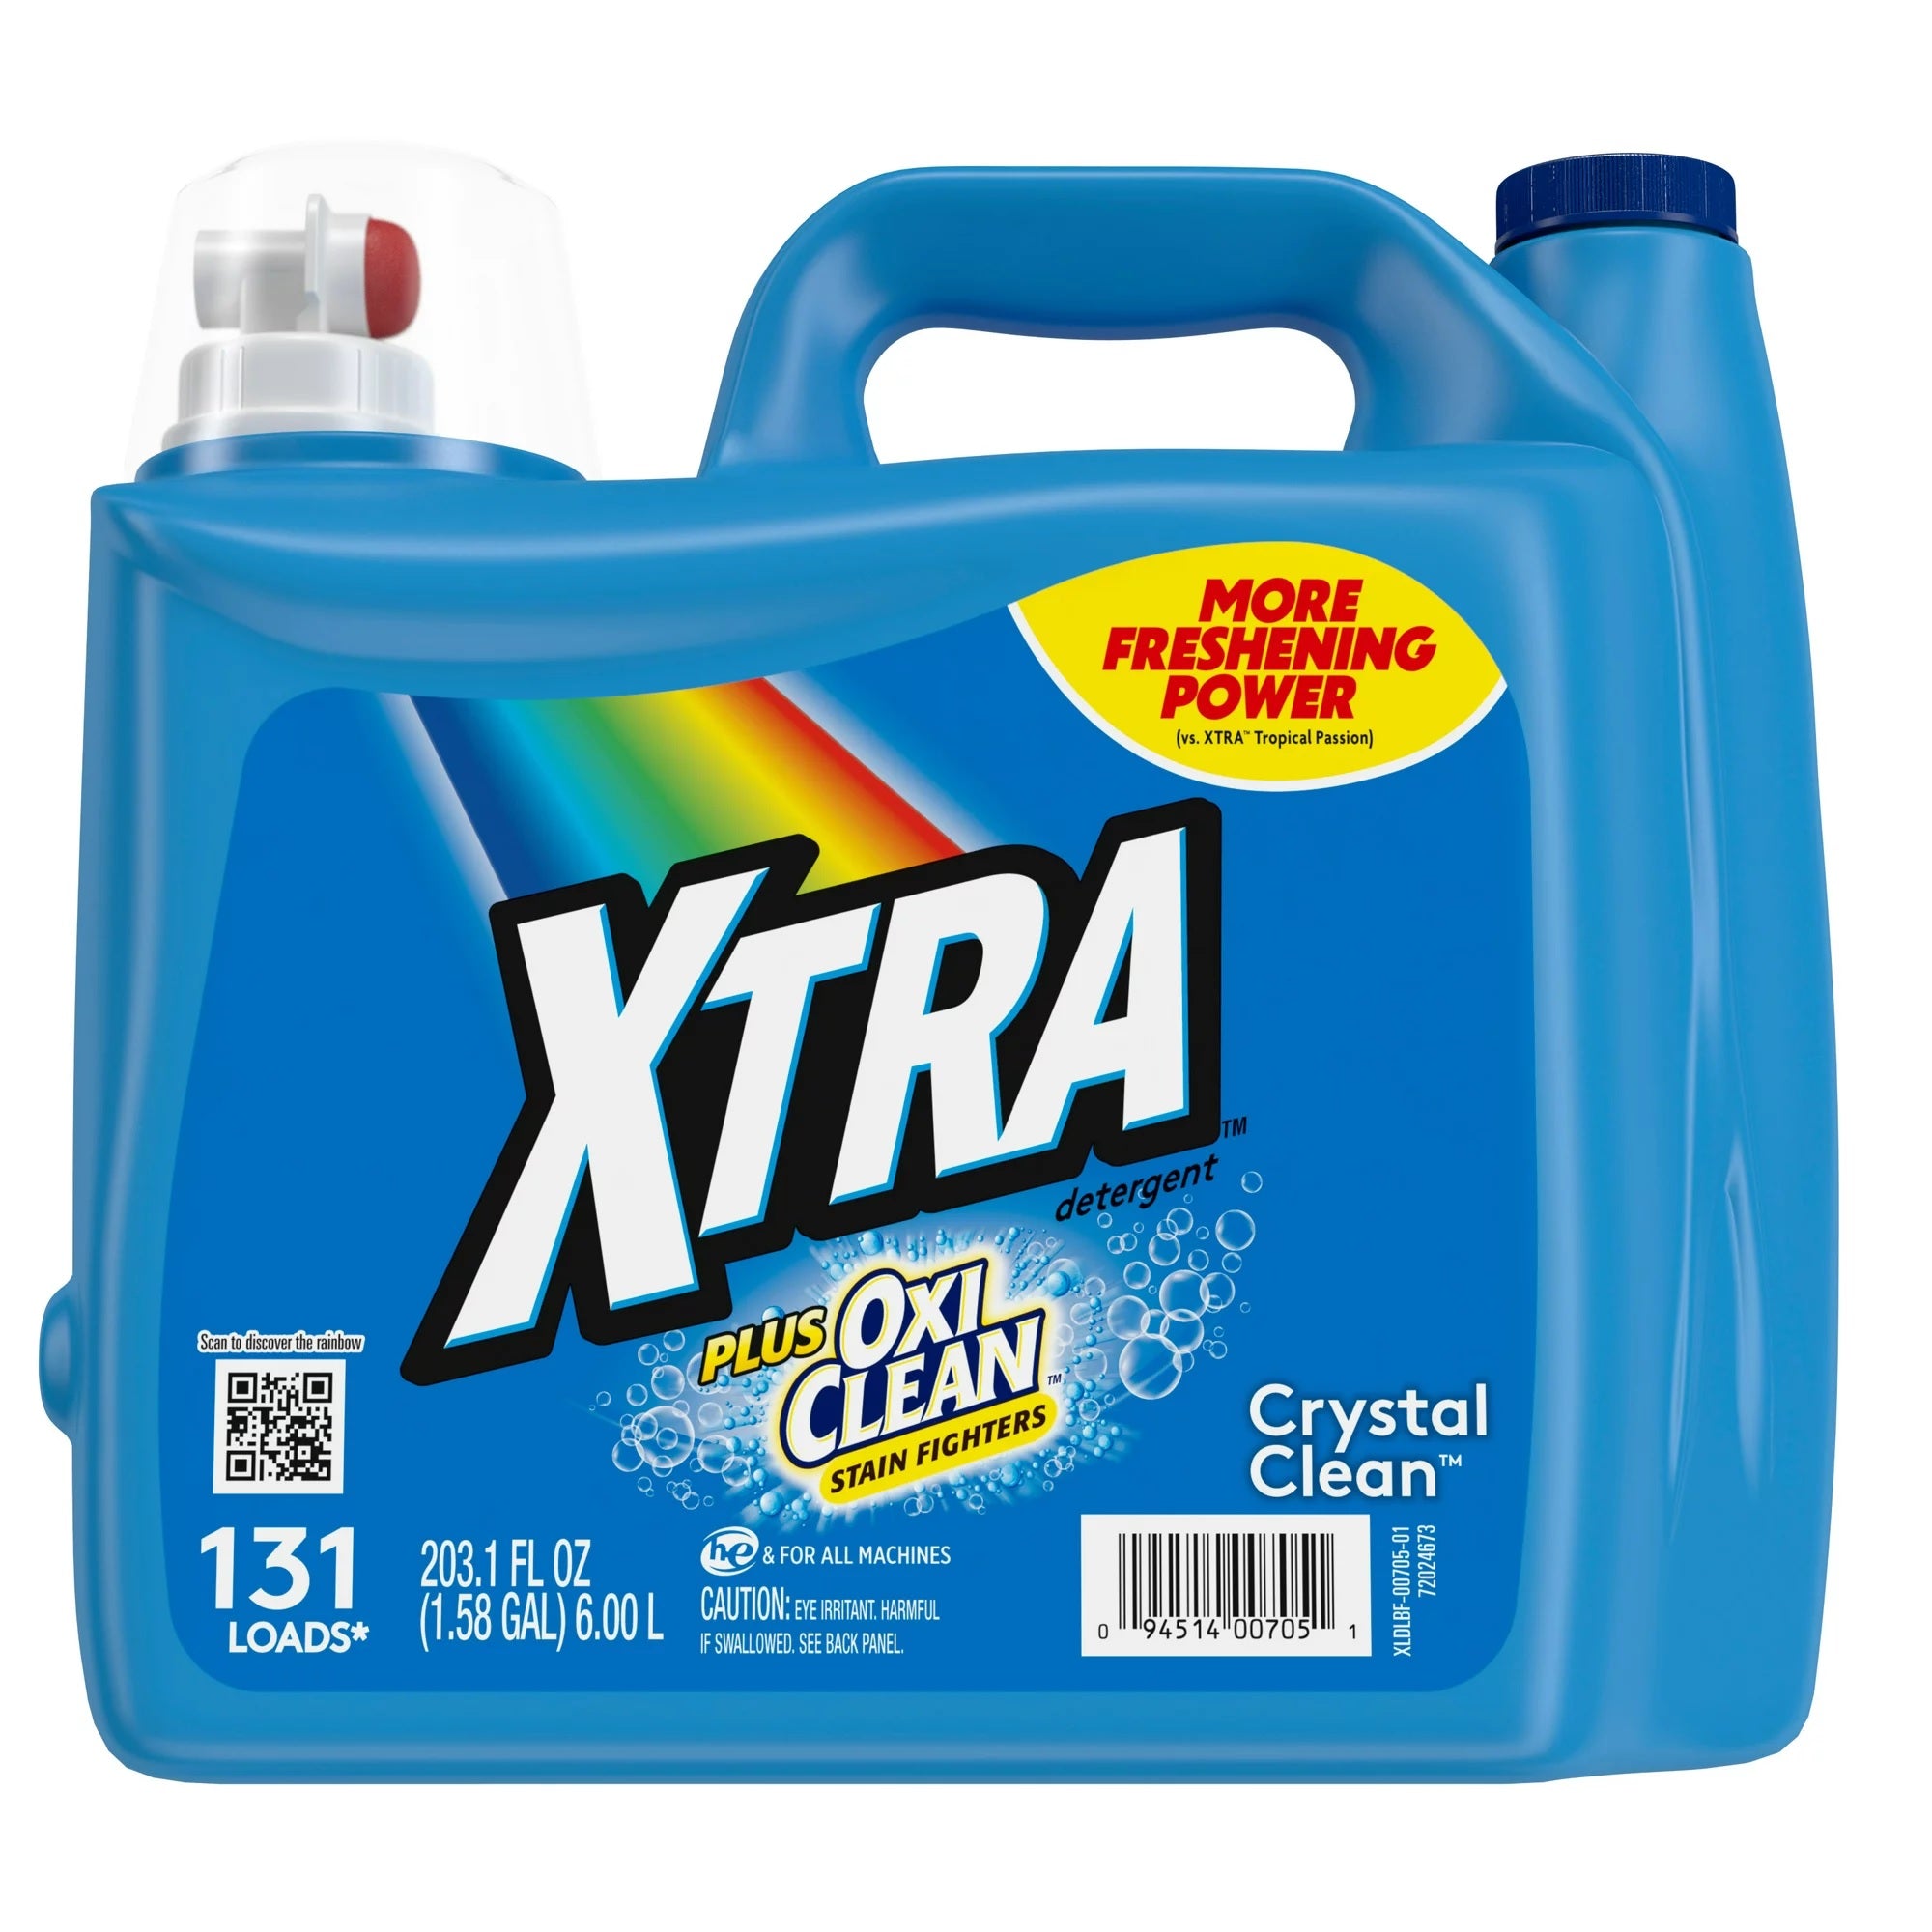 Xtra Liquid Laundry Detergent Plus Oxi Clean Crystal Clean - 203.2oz/2pk